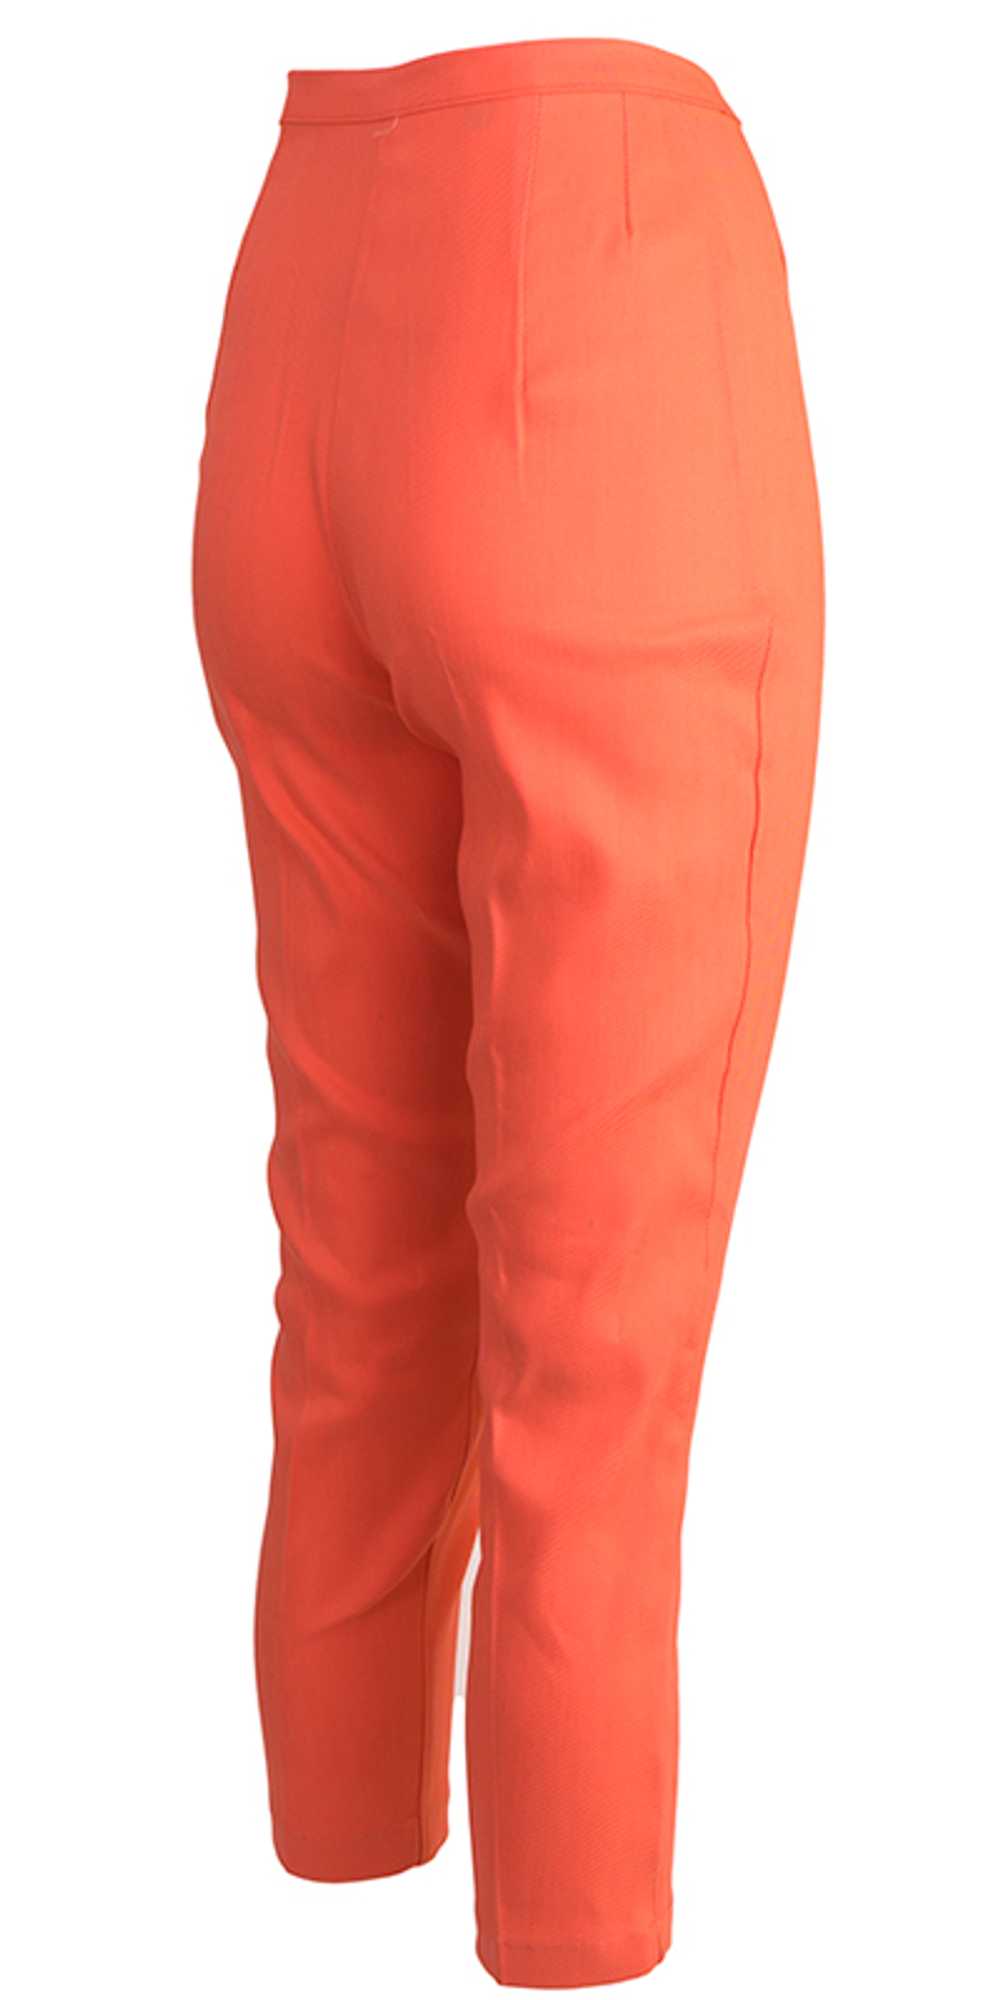 Orange Sherbet 50s Stretch Capris - image 3